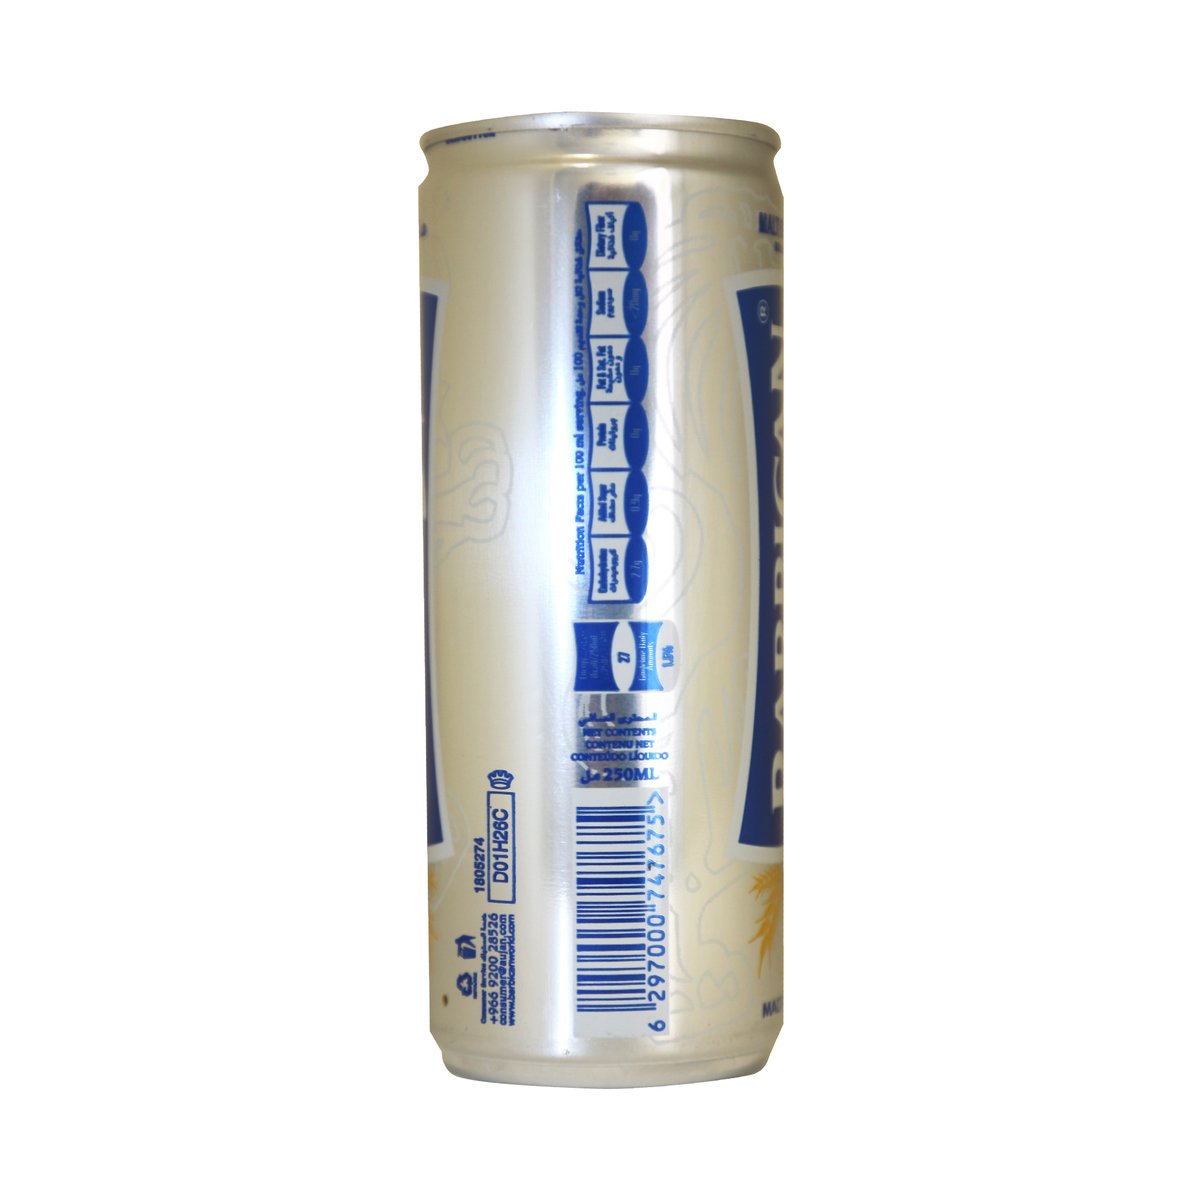 Barbican Non Alcoholic Malt Beverage Regular 6 x 250 ml